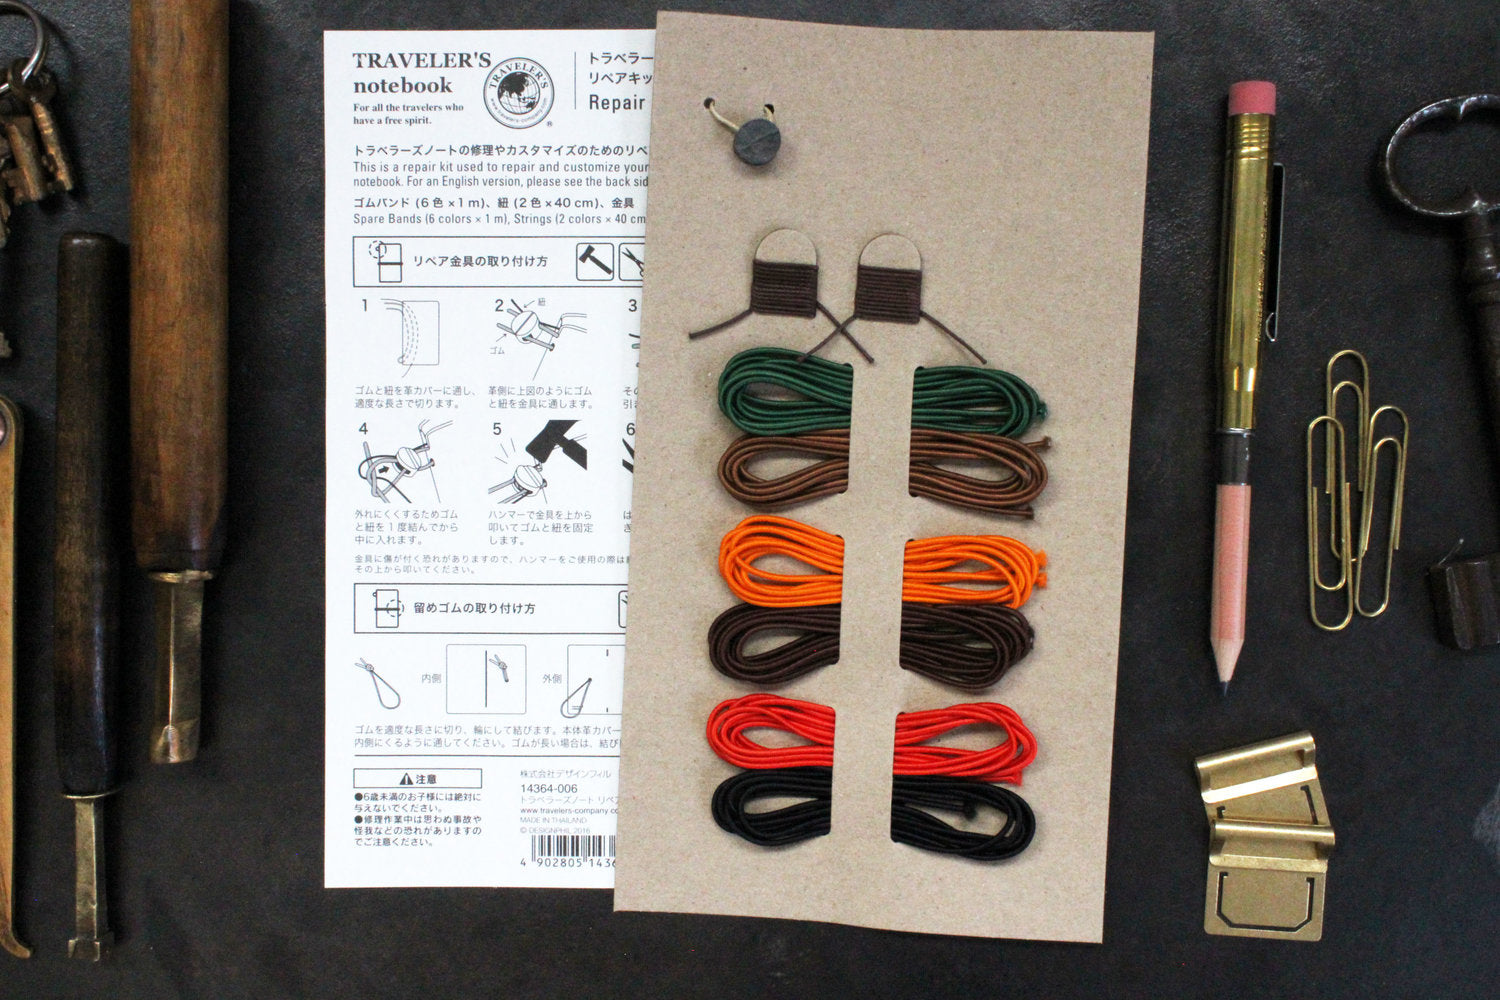 Traveler's Company Regular Notebook Refill - 009 Repair Kit | Flywheel | Stationery | Tasmania